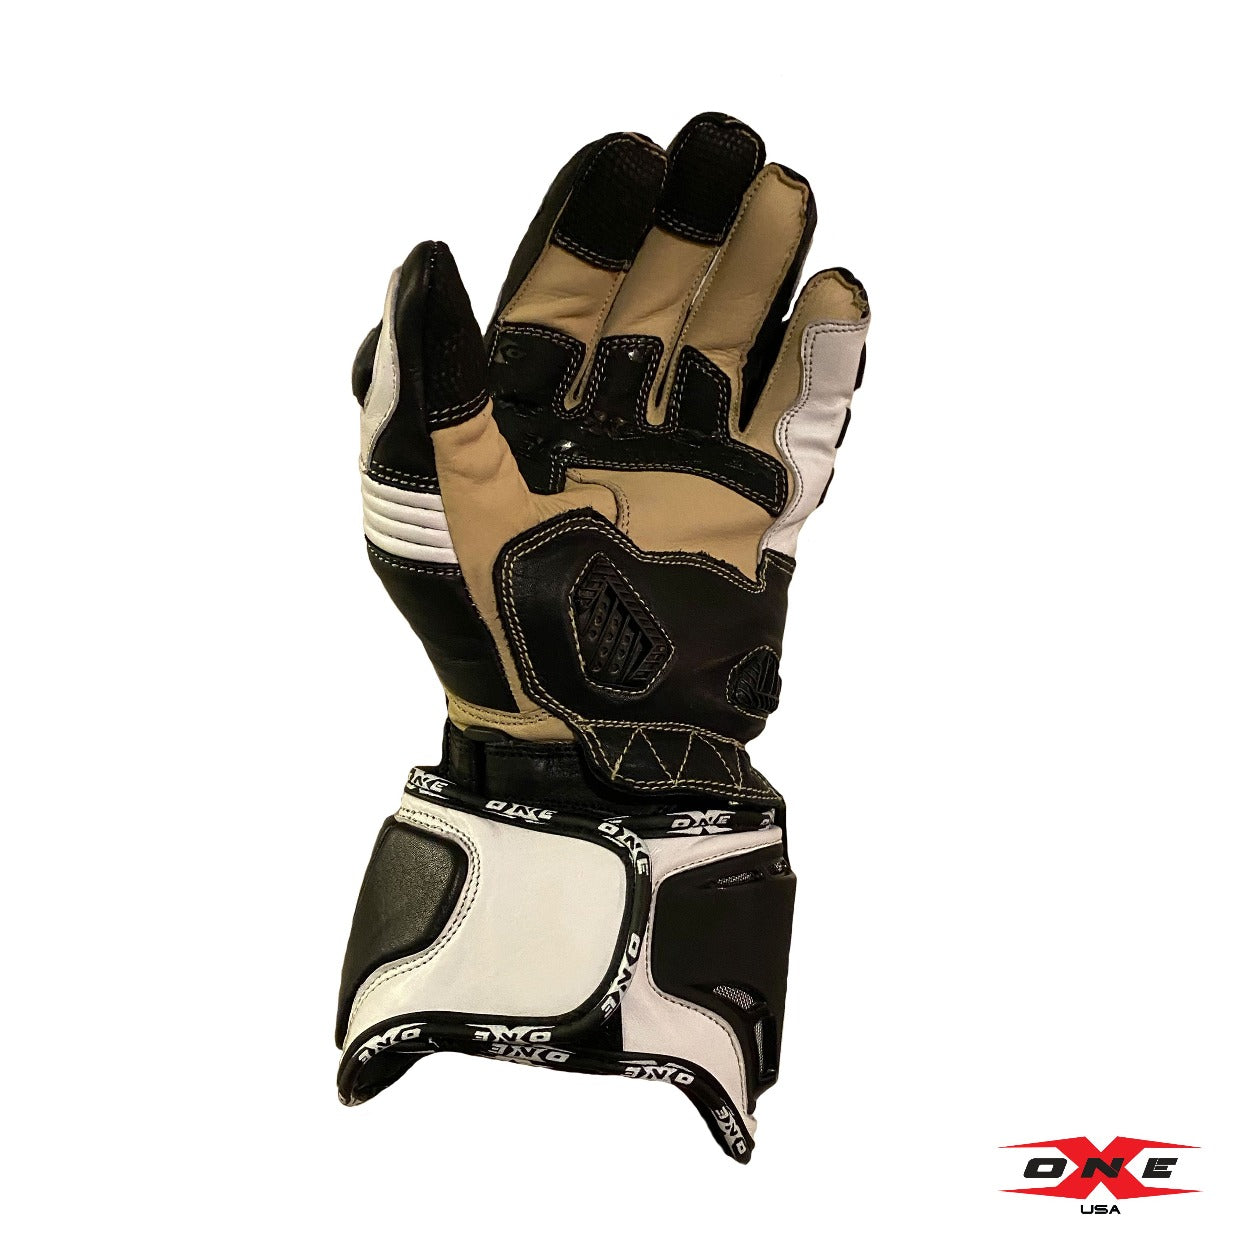 OneX USA Pro Race Gloves - White